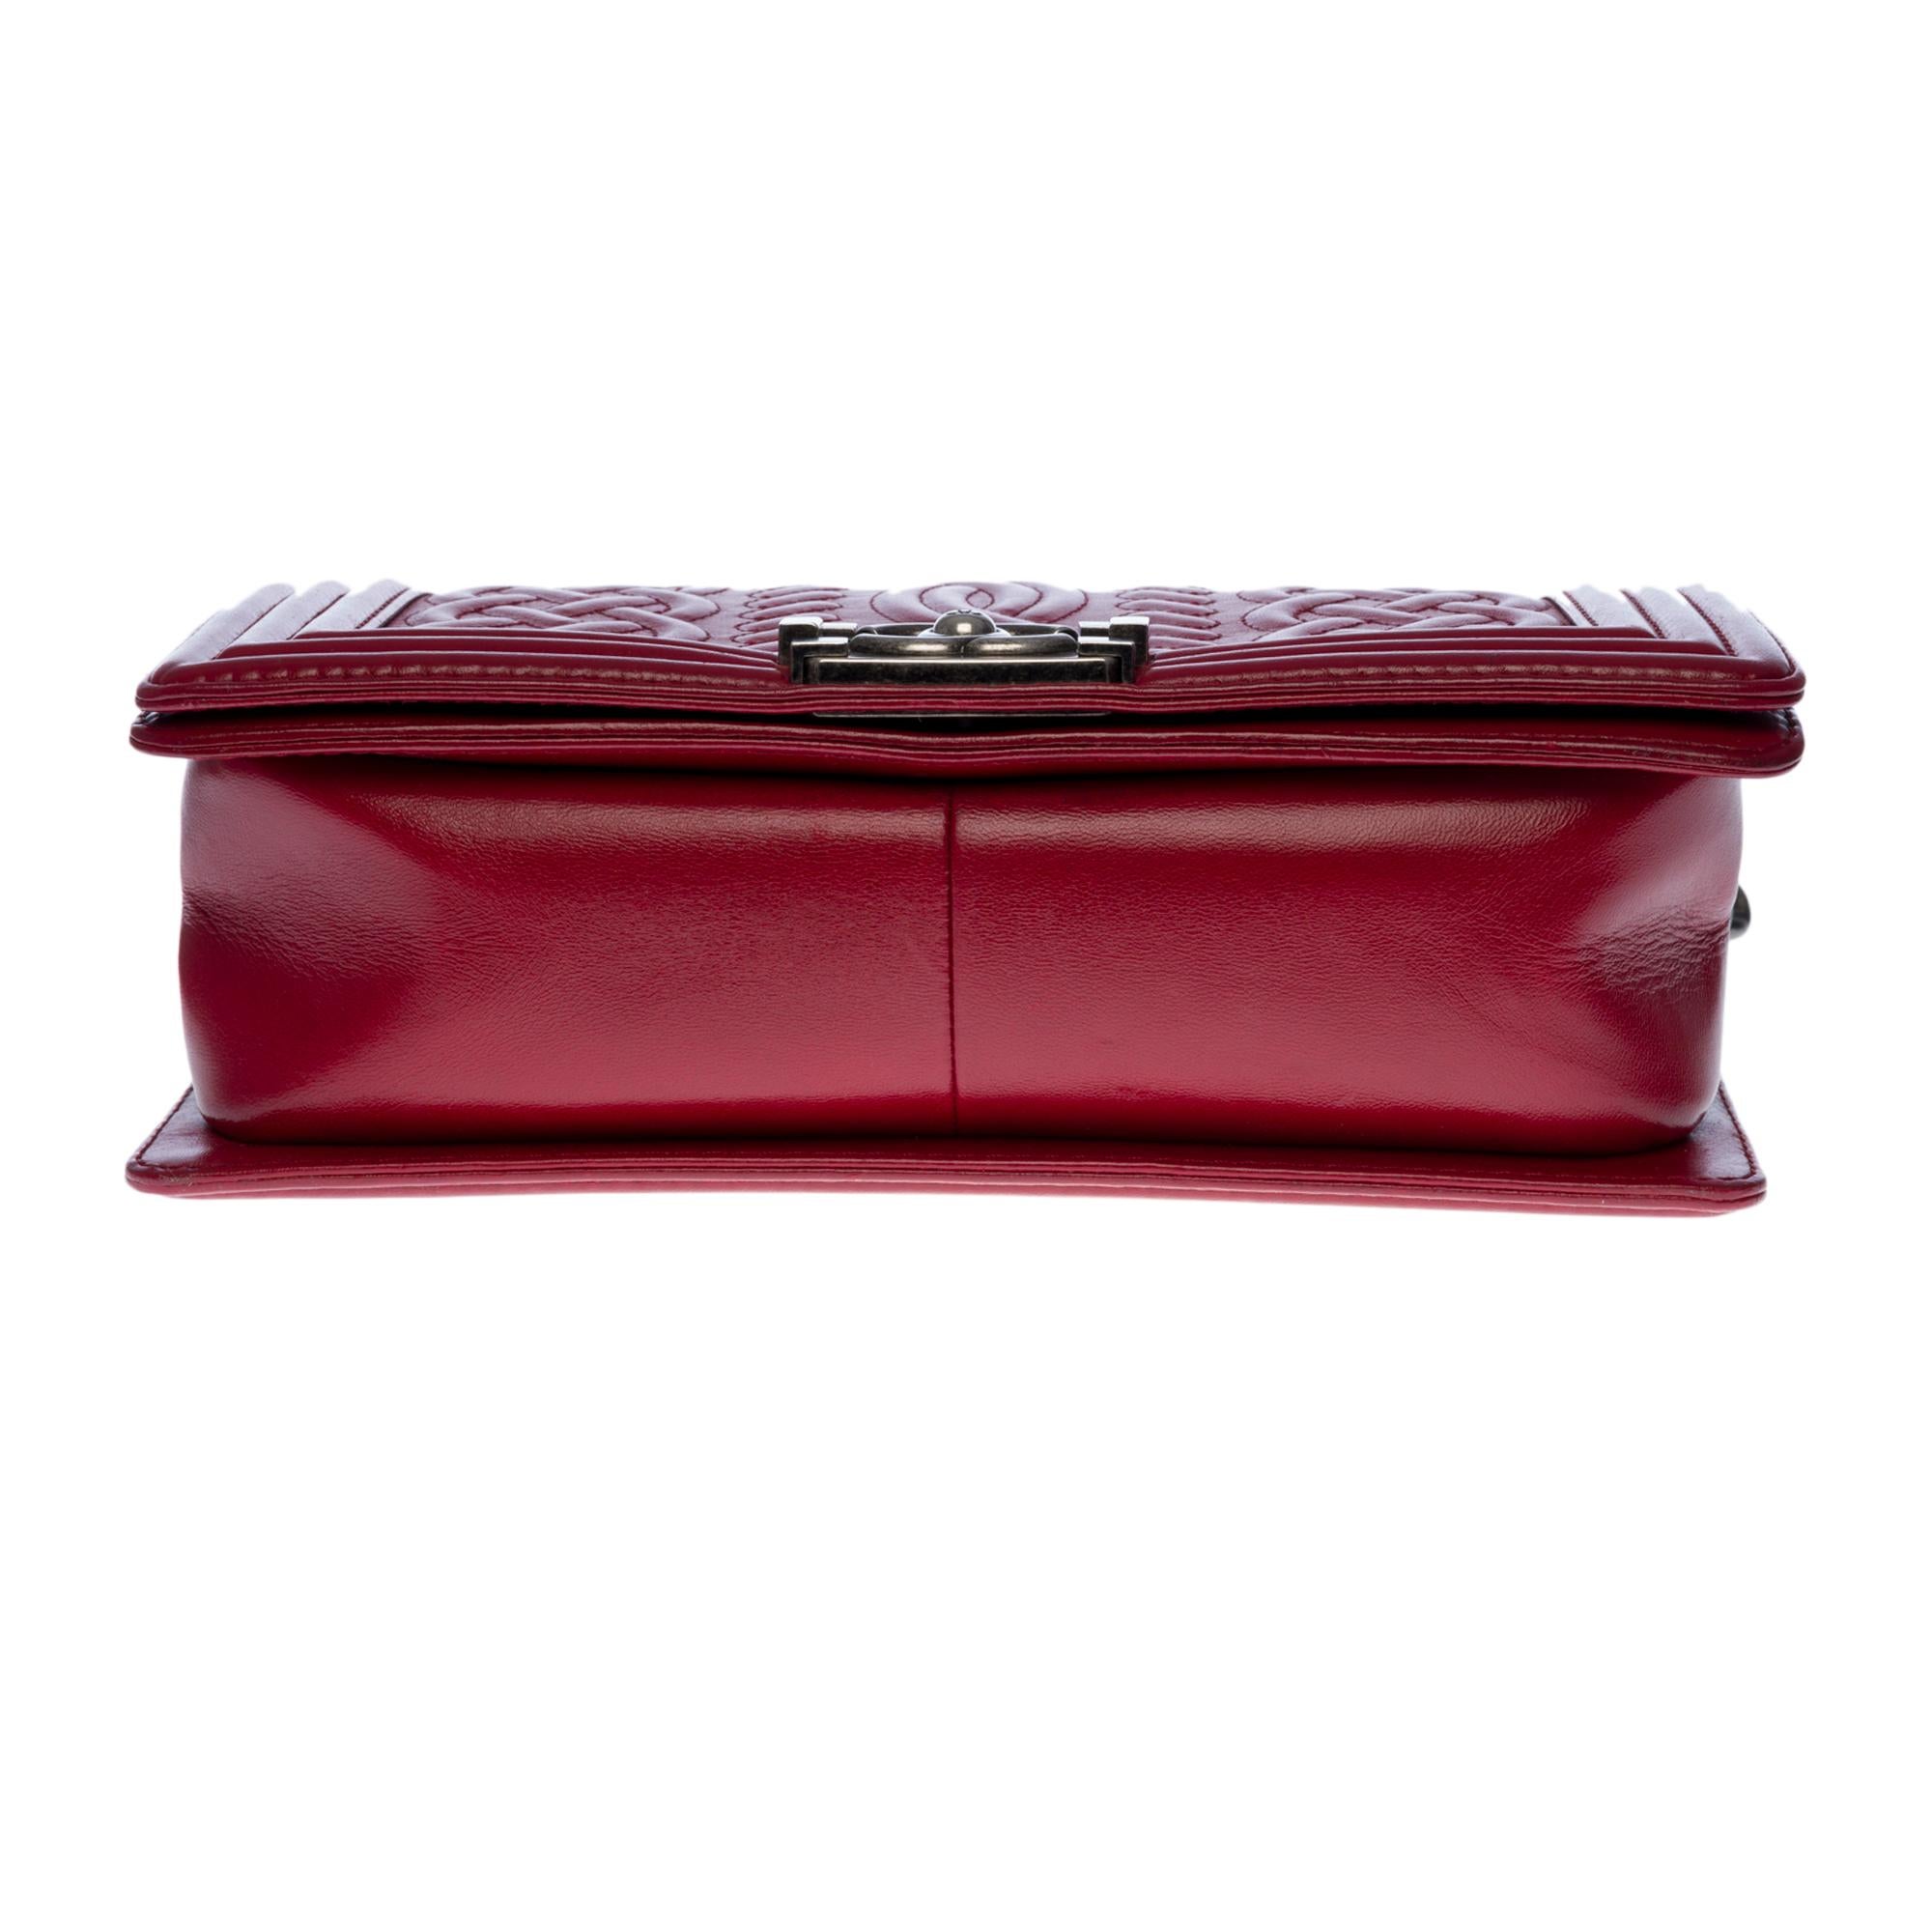 Limited Edition Chanel Boy Old medium shoulder bag in red embossed leather, SHW 2